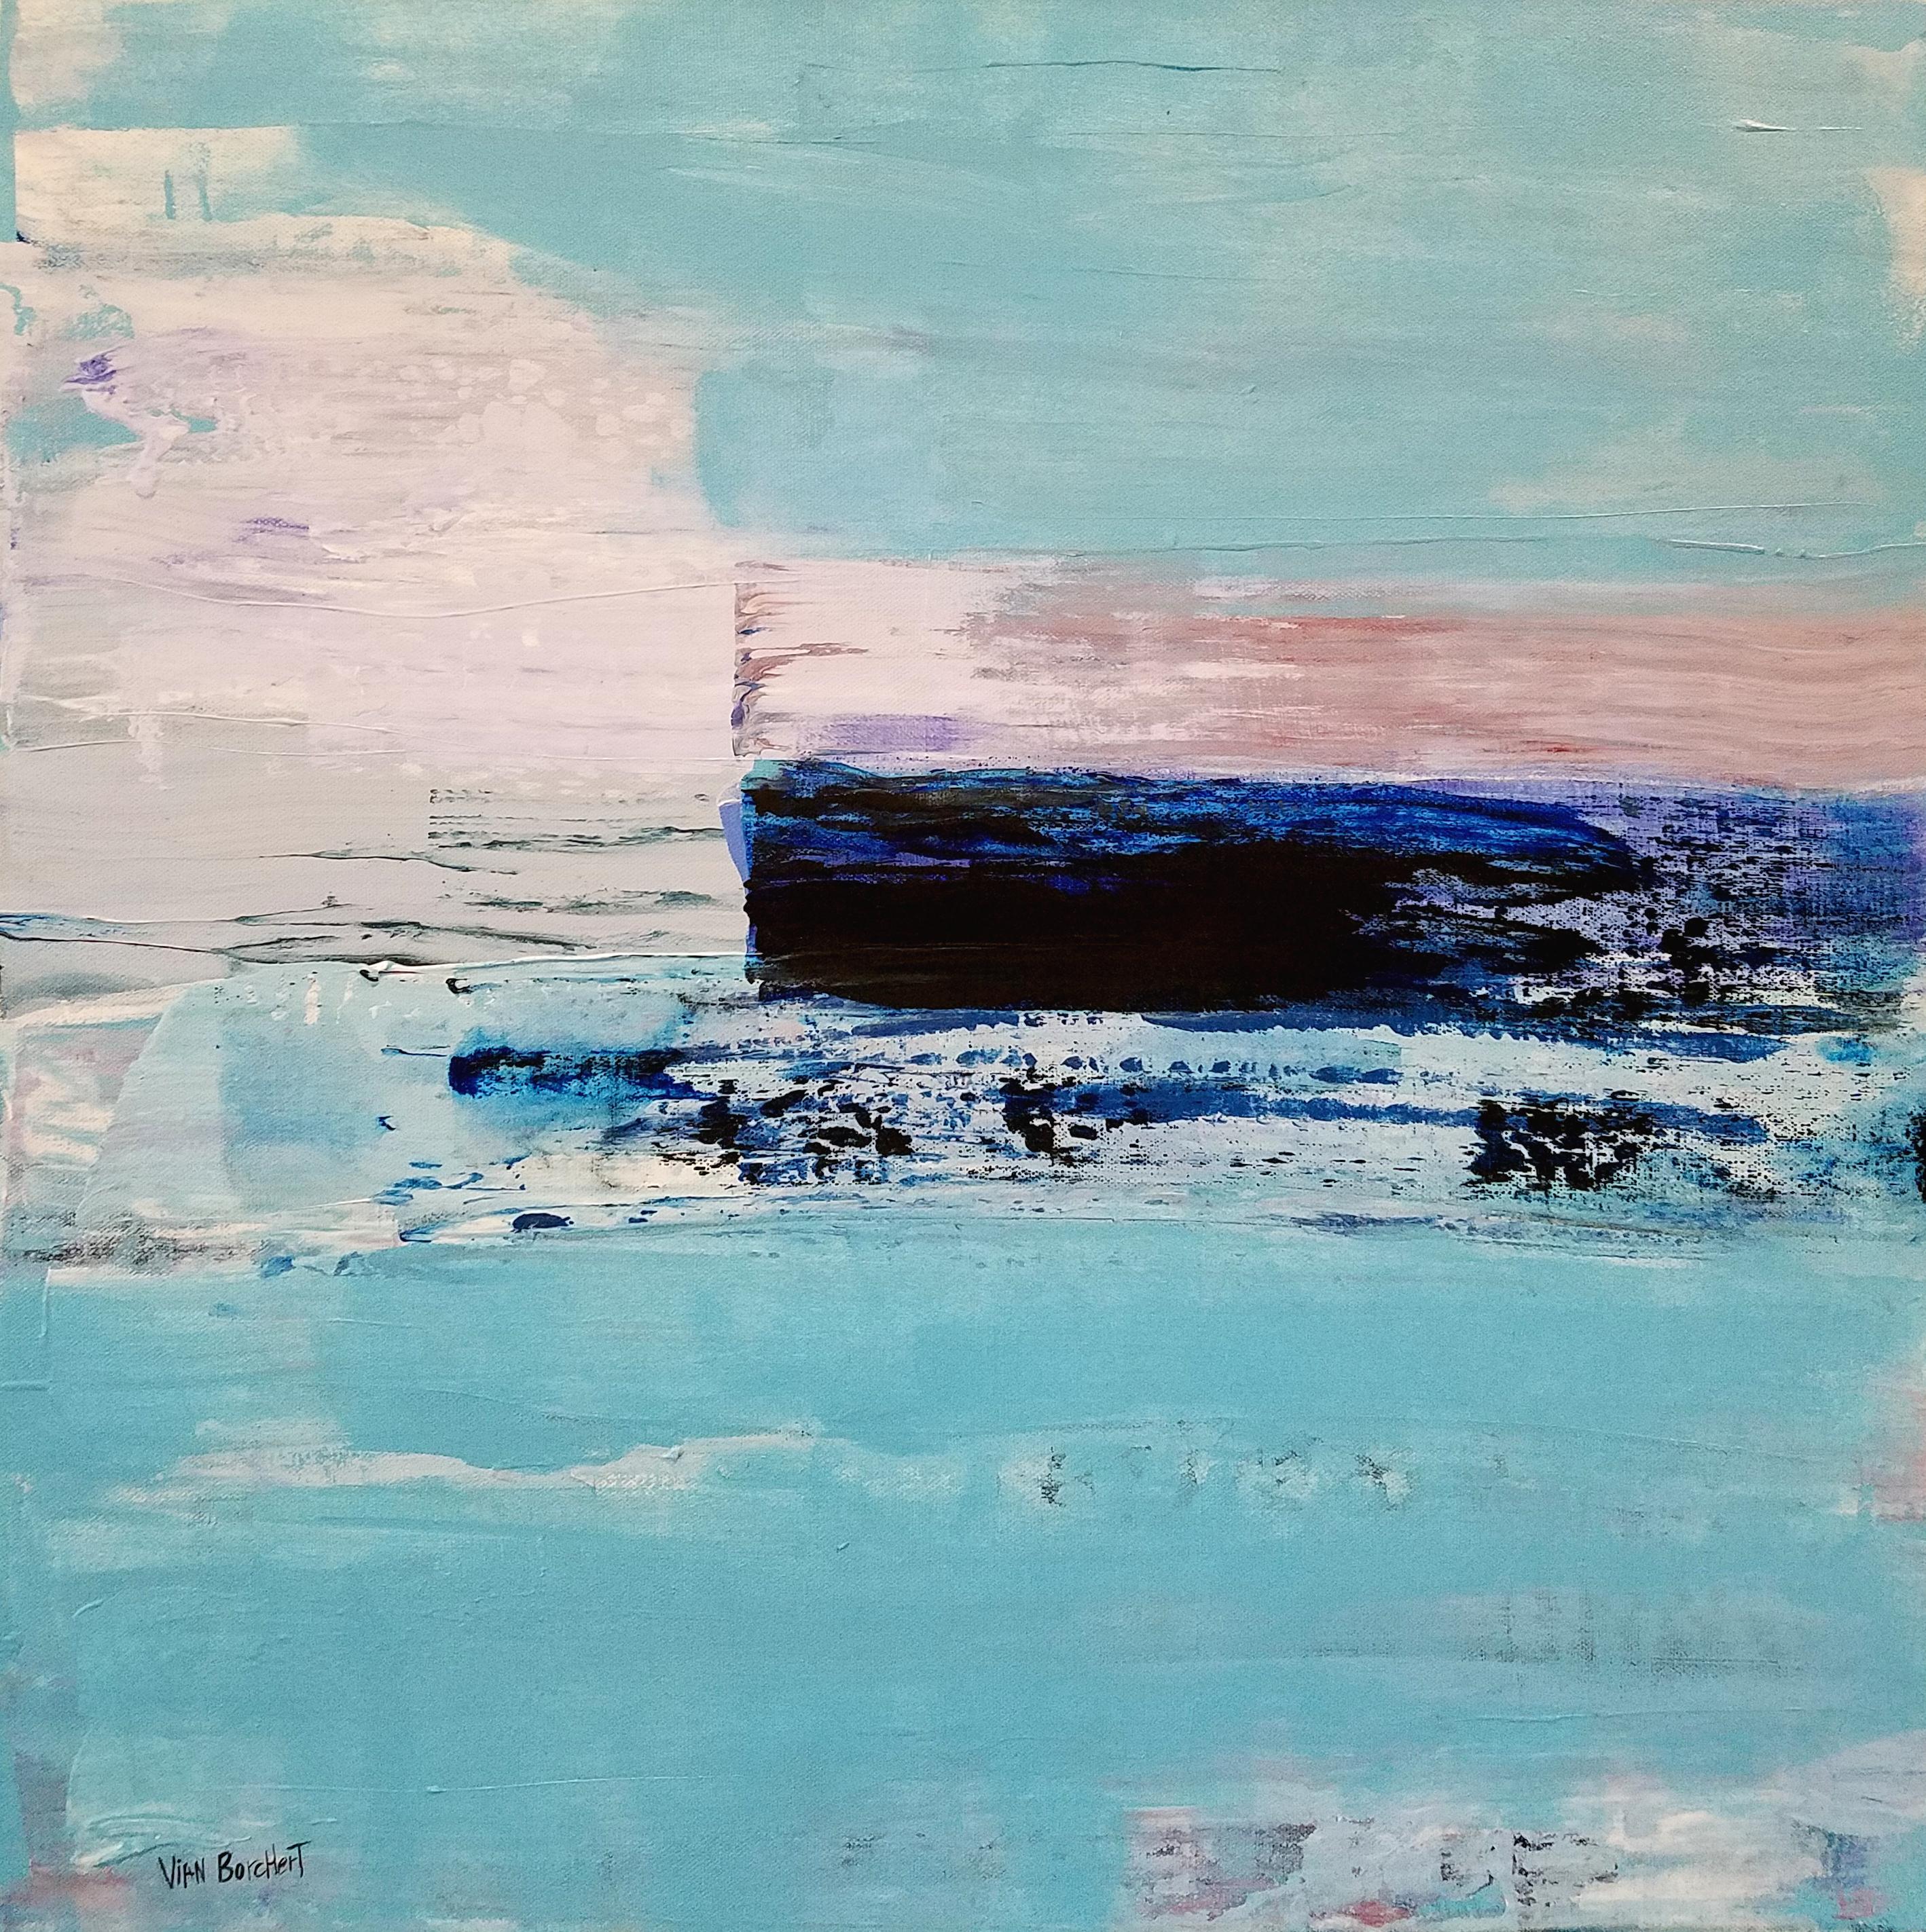 Abstract Painting Vian Borchert - Mer calme -   (abstrait, paysage marin, abstrait, paysage marin abstrait